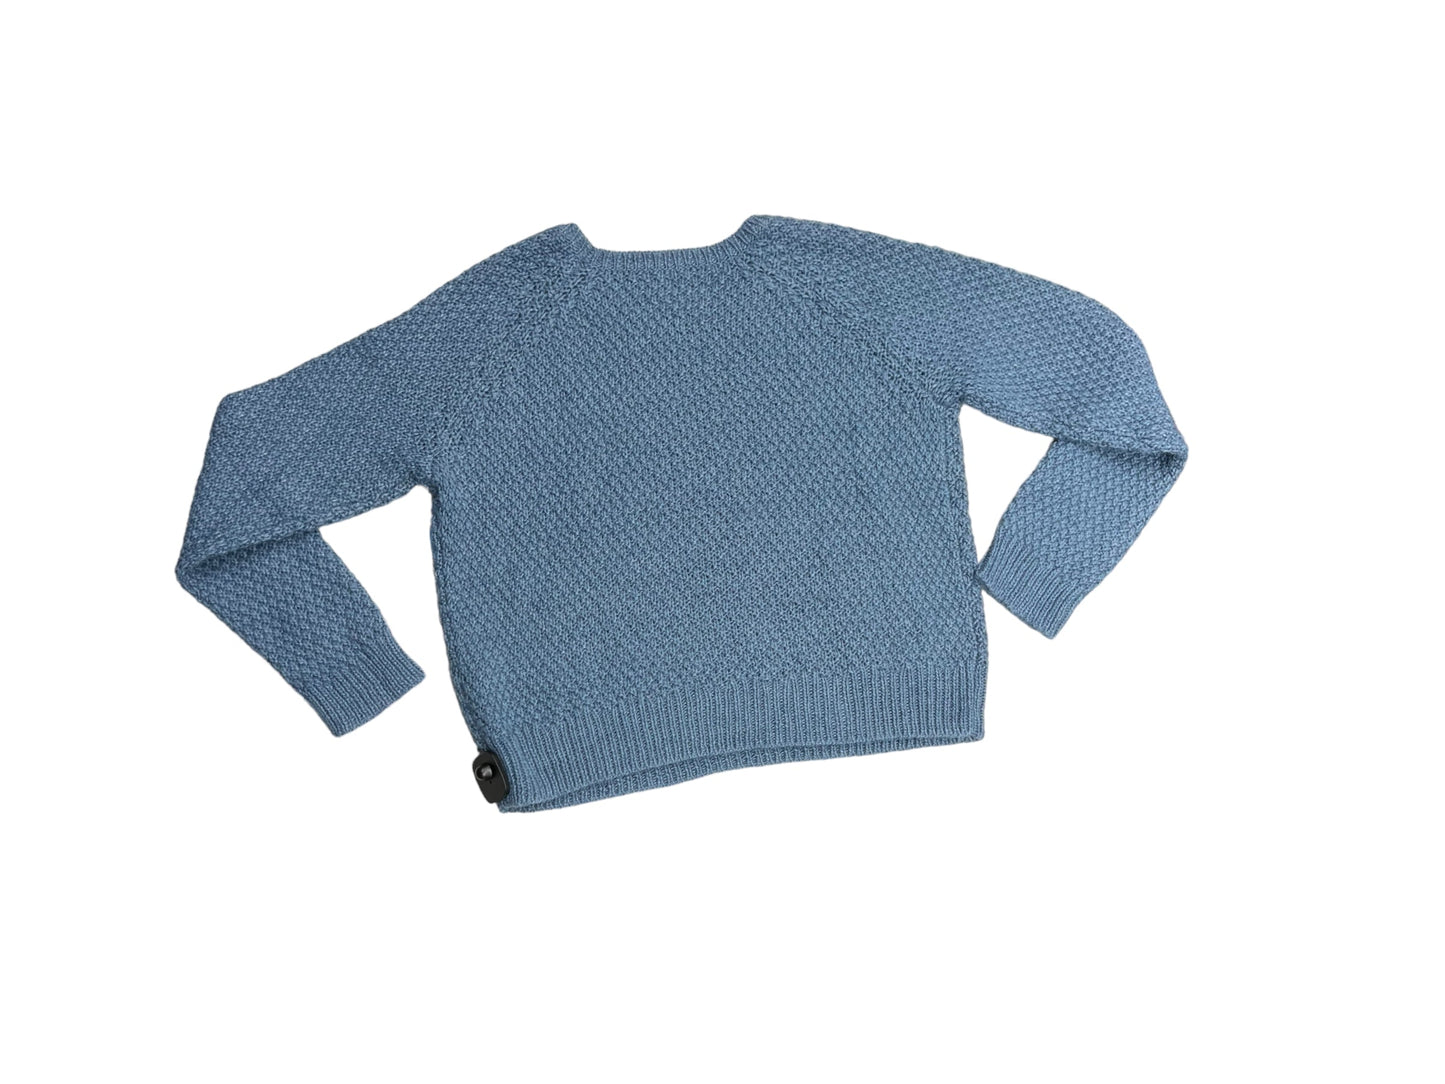 Sweater By Lauren By Ralph Lauren  Size: Petite Large